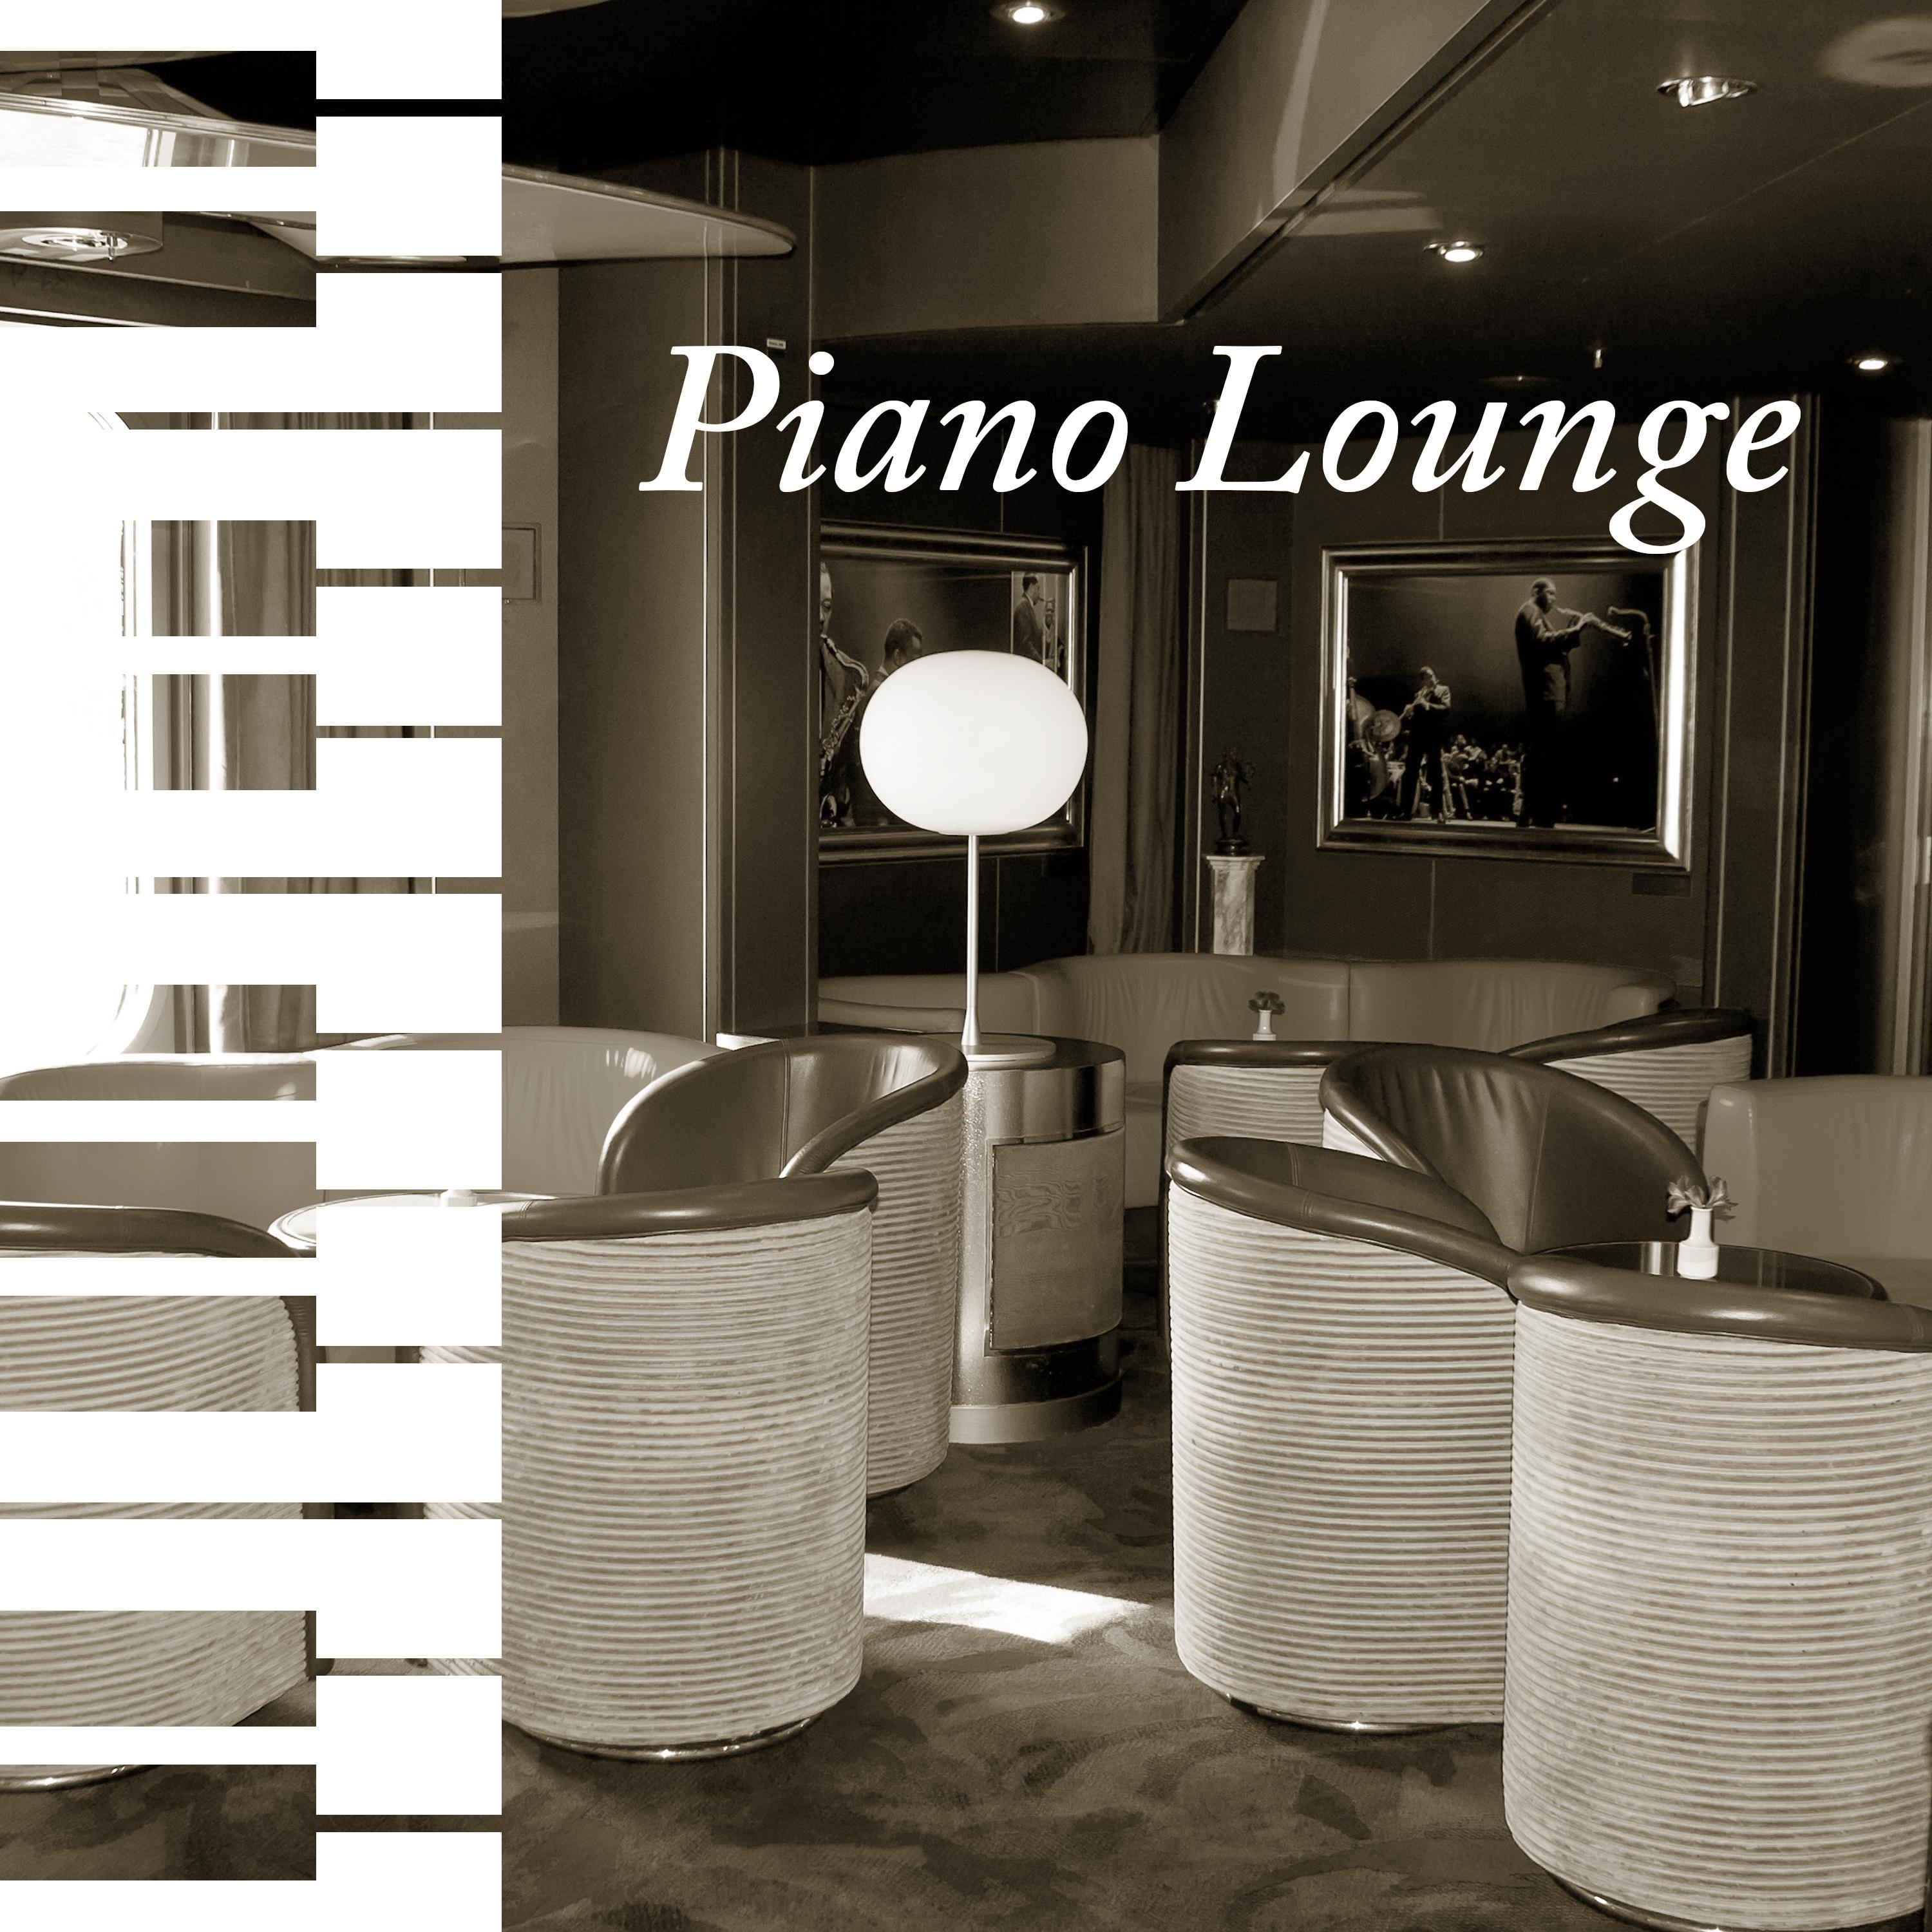 Piano Lounge  Pure Instrumental Jazz, Piano Solo, Jazz Lounge, Jazz for Restaurant  Cafe